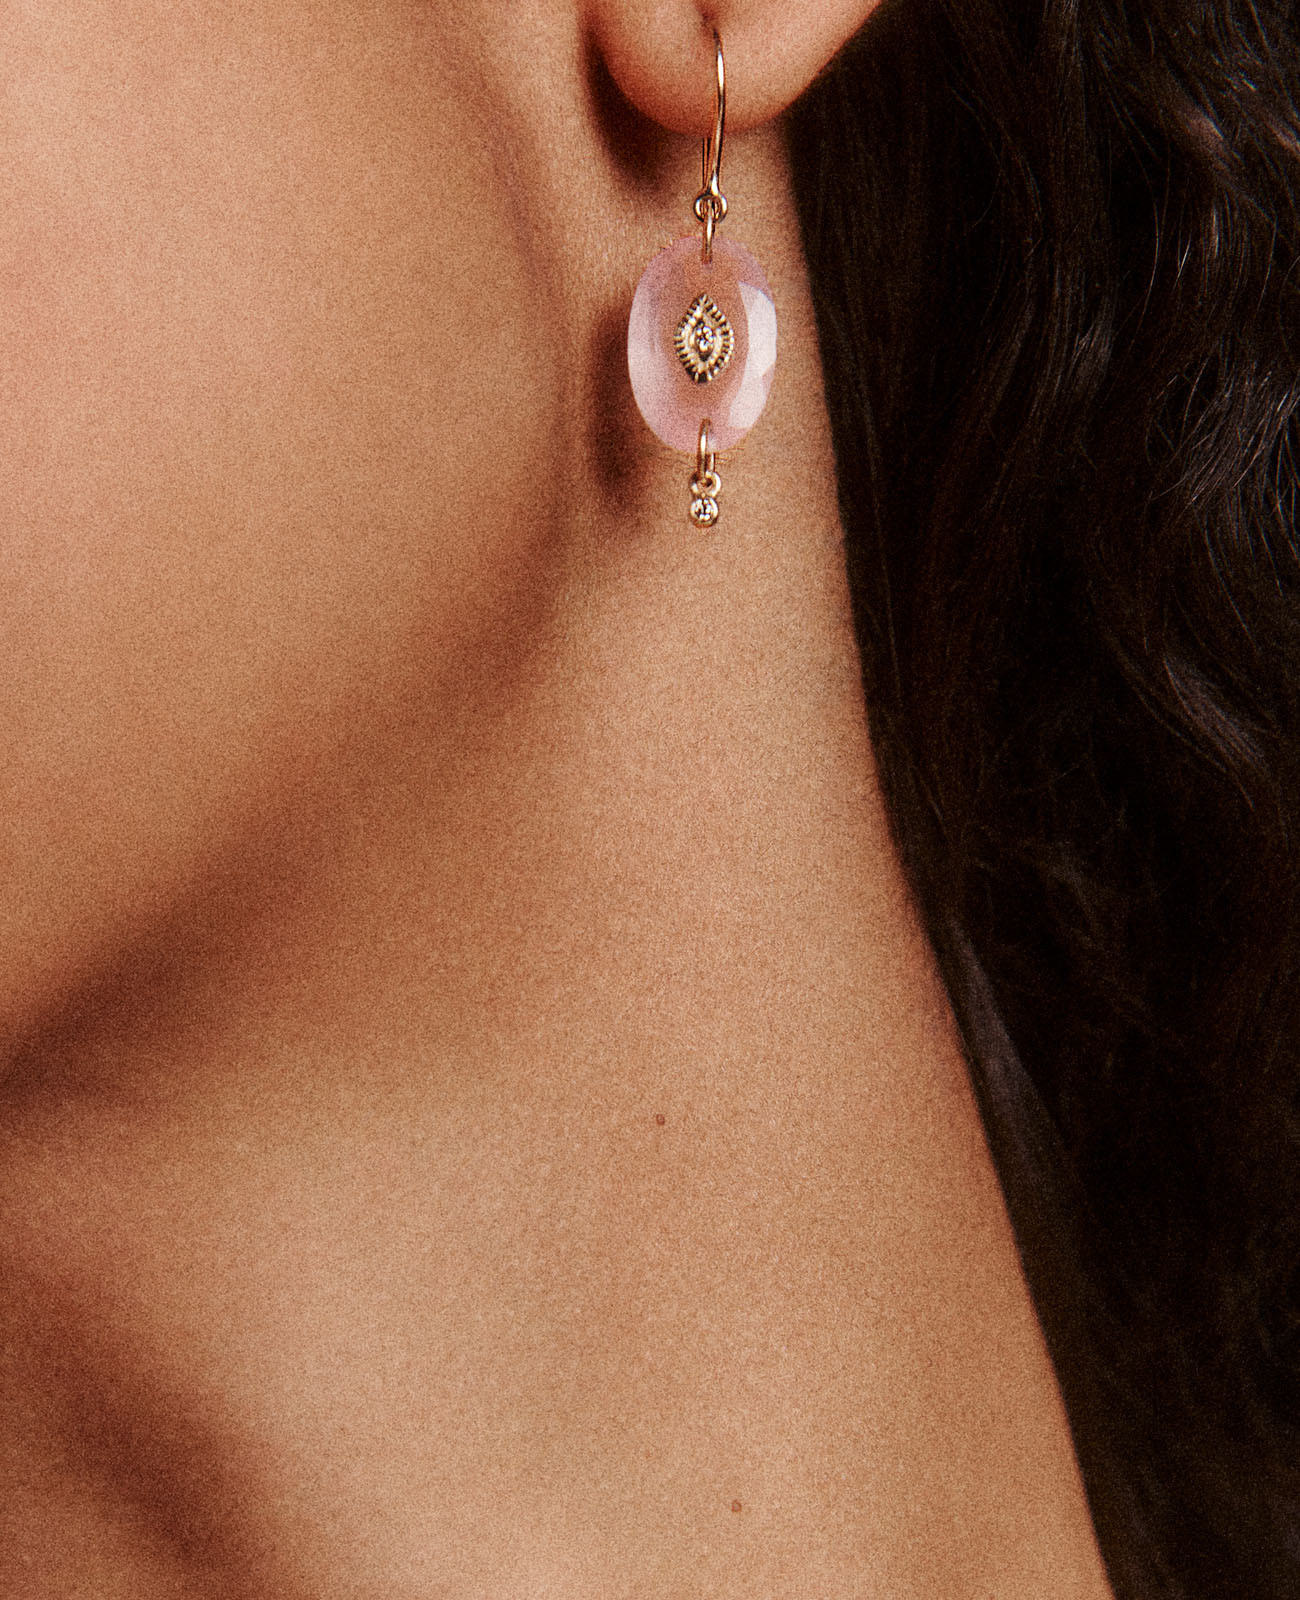 SOUAD PURPLE AMETHYST earring pascale monvoisin jewelry paris